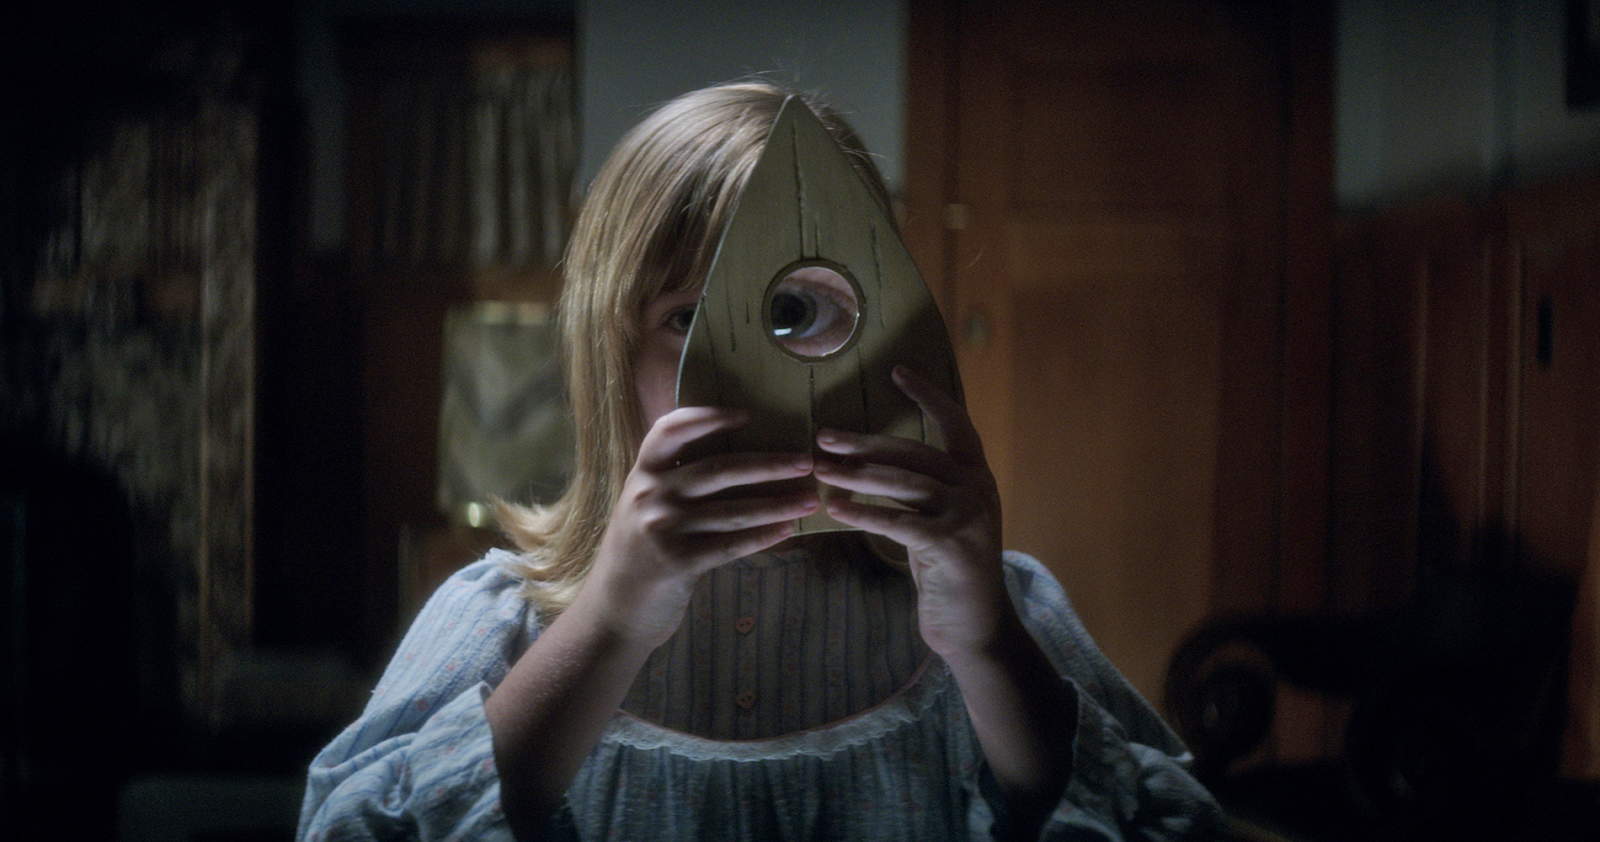 Review filem Ouija : Origin of Evil Malay